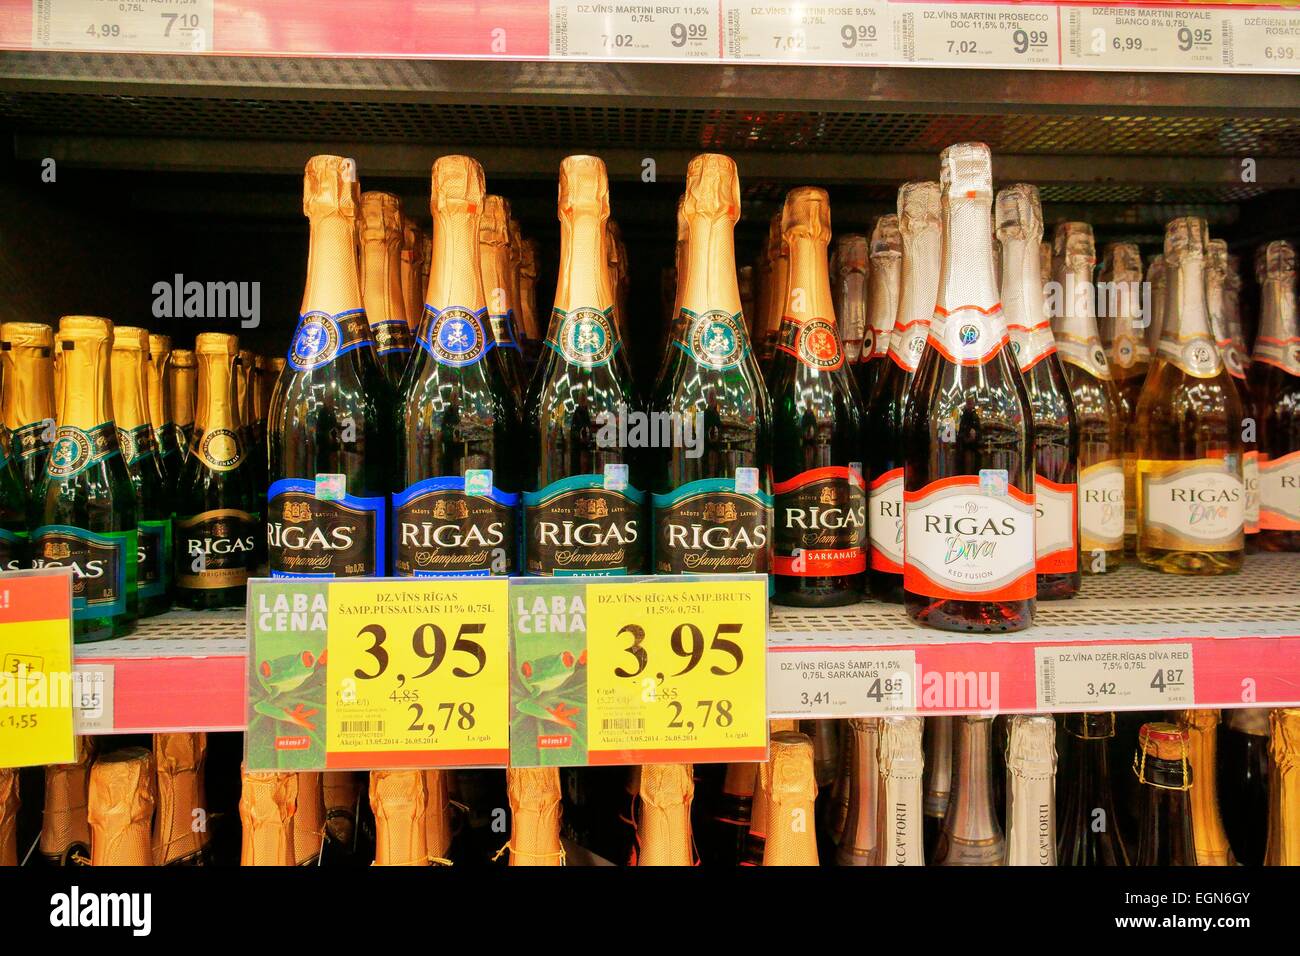 Riga Latvia. Rimi hypermarket north city centre store.  Supermarket aisle displays. Alcohol Latvian champagne wine bottle sales Stock Photo